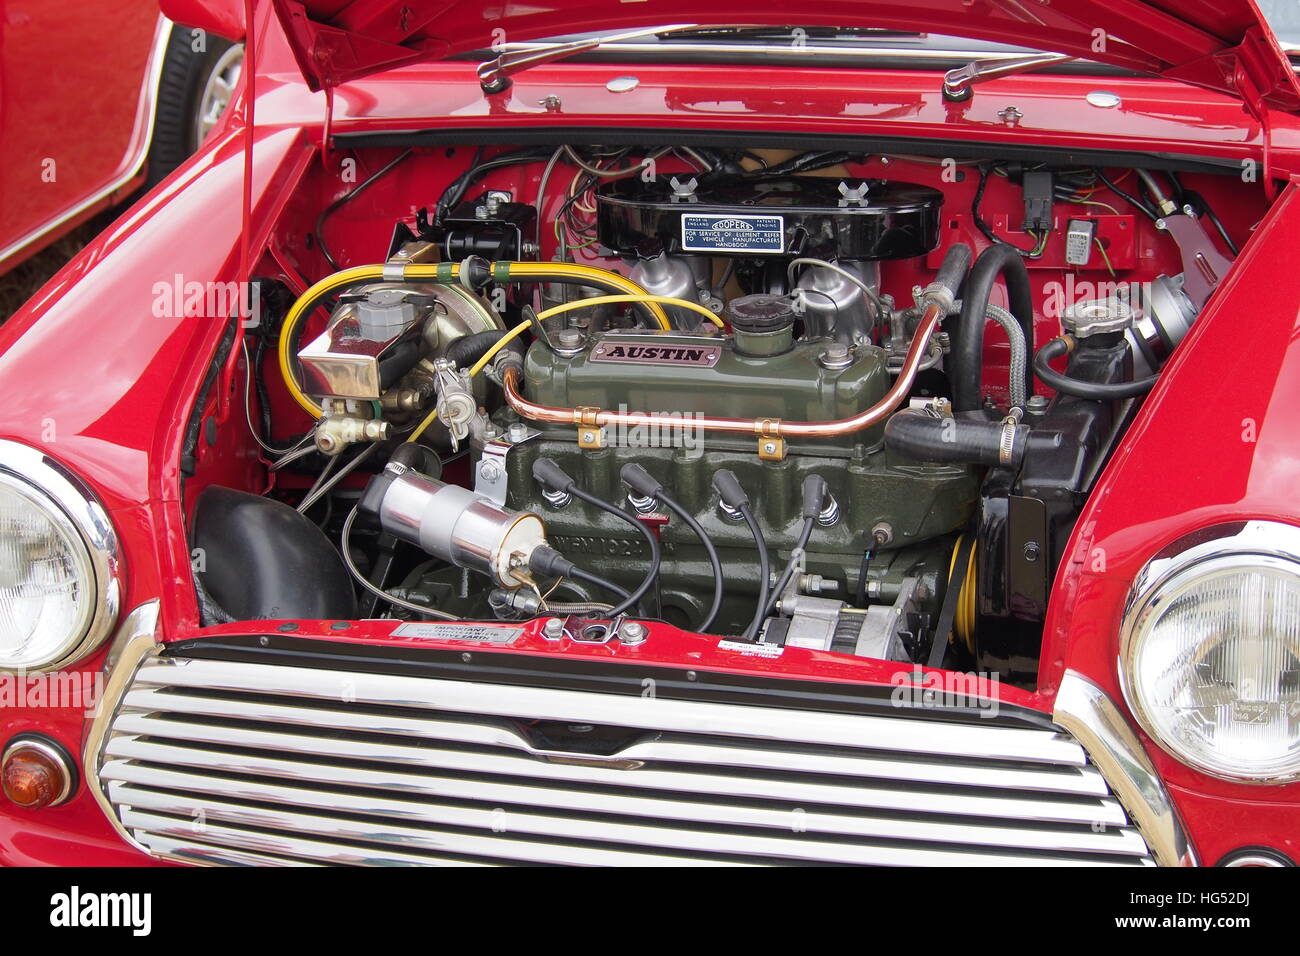 Austin Mini engine Stock Photo - Alamy